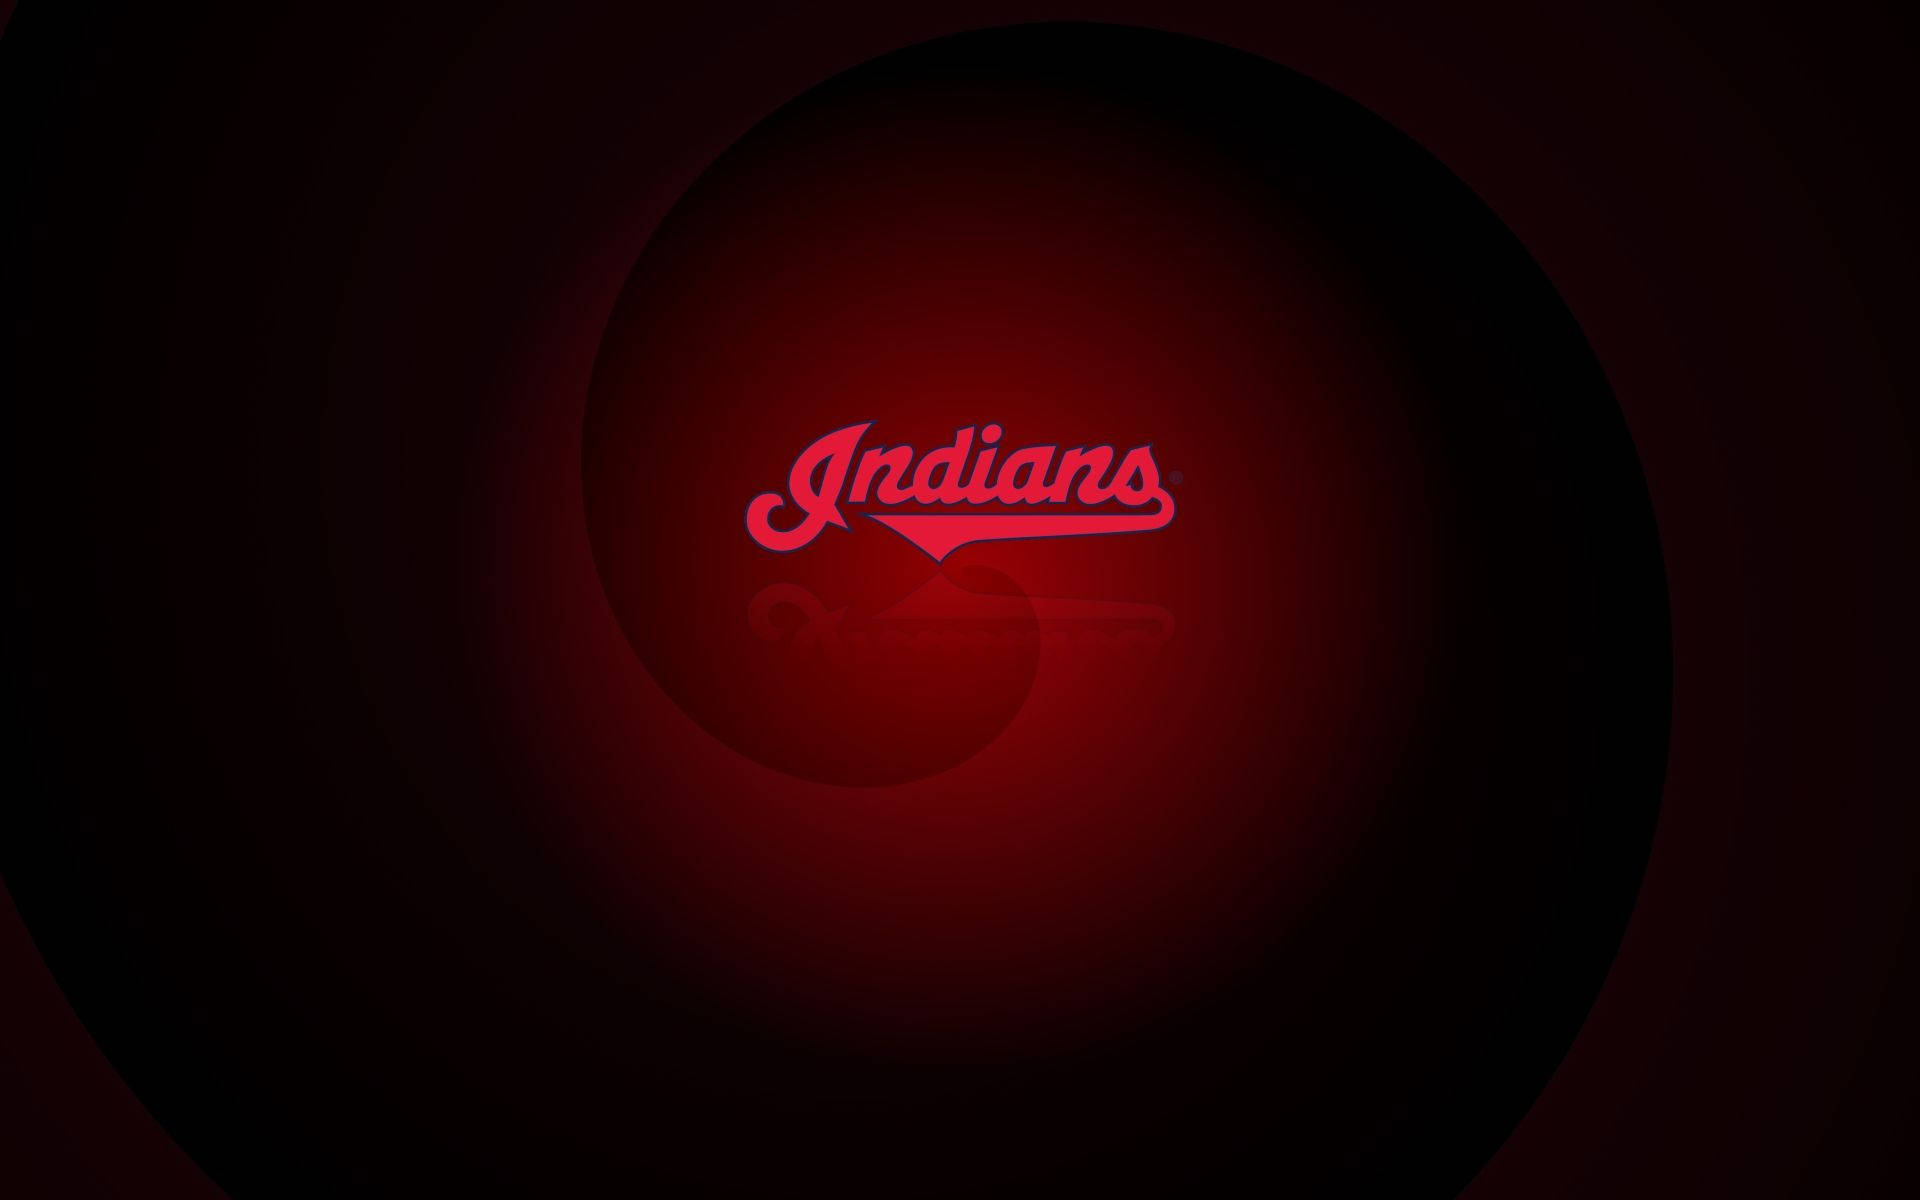 49+] Cleveland Indians HD Wallpaper - WallpaperSafari